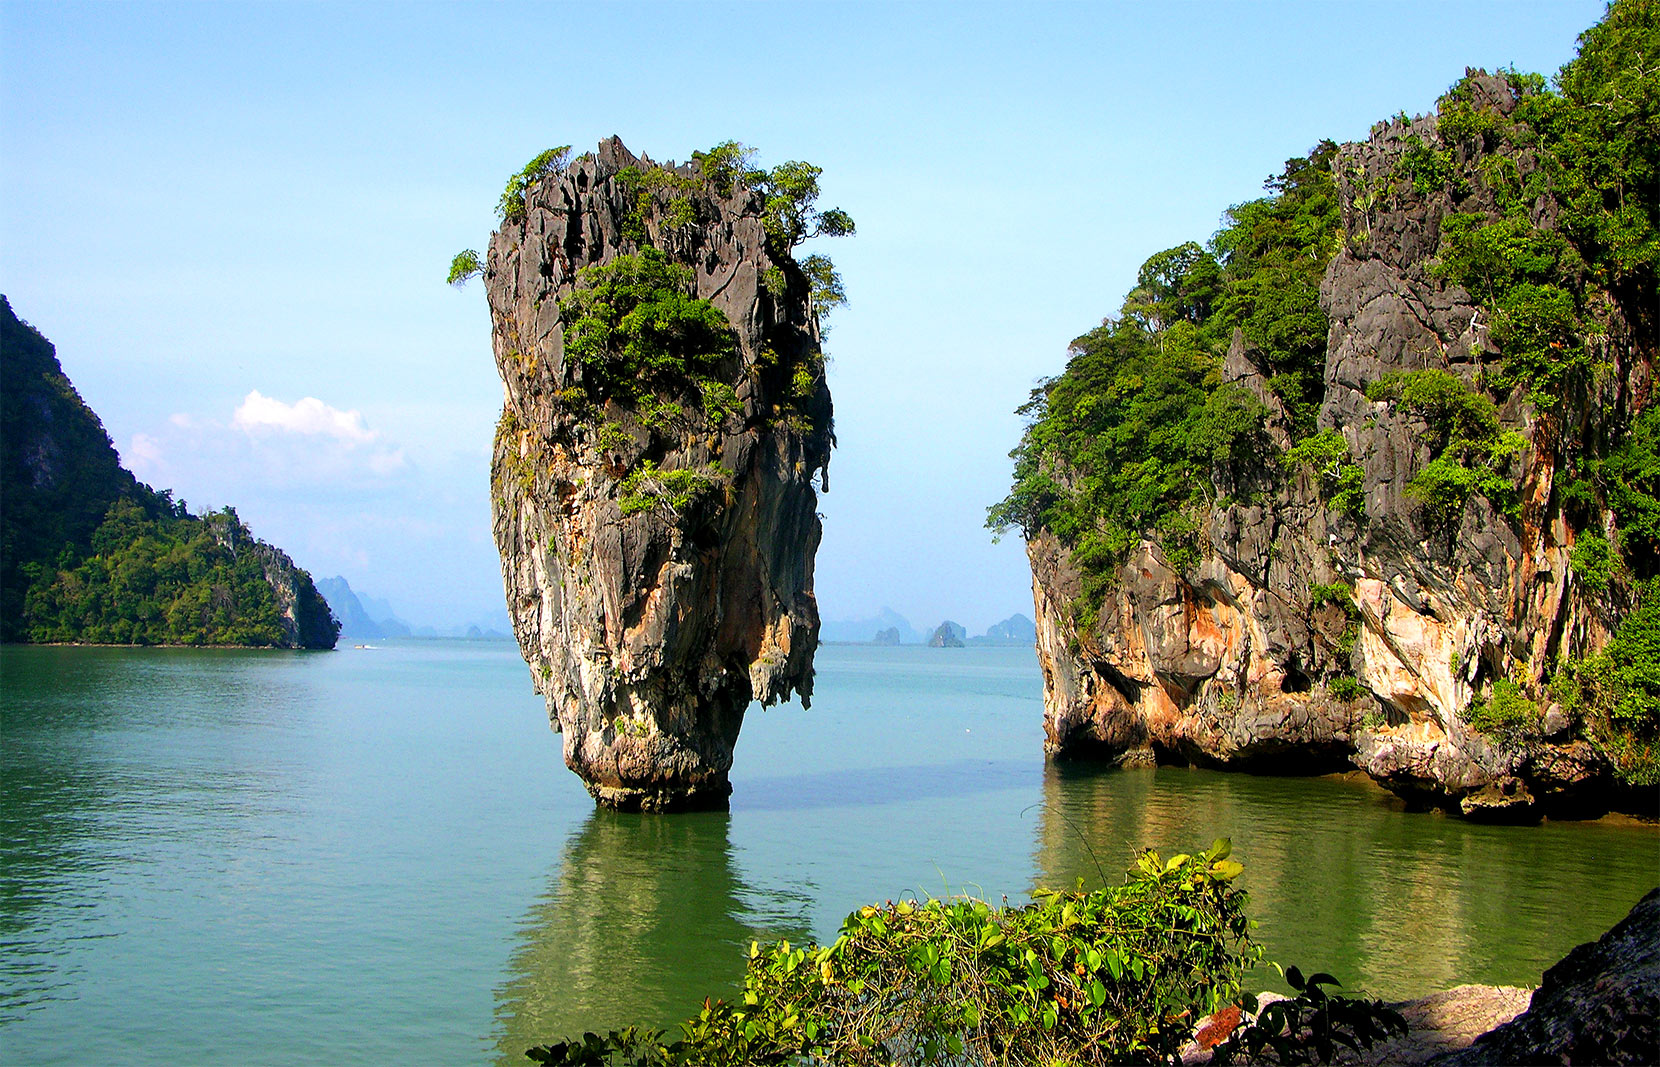  Phang Nga  Thailand Reise Tipps f r einen spannenden Urlaub